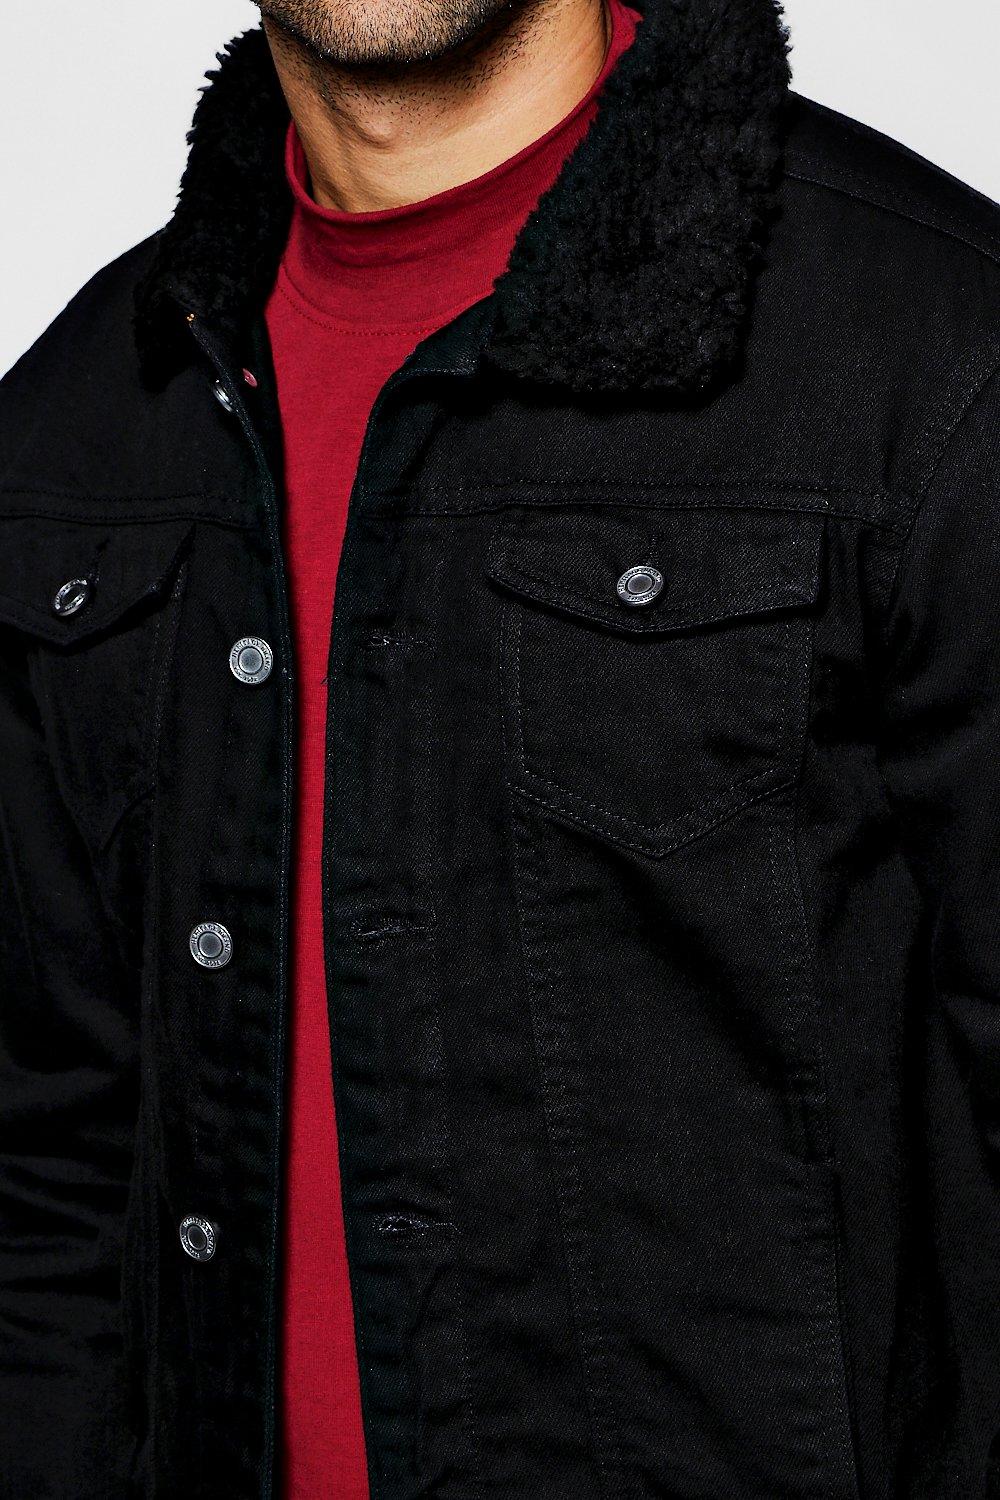 Boohoo Mens Black Regular Fit Borg Collar Denim Jacket | eBay